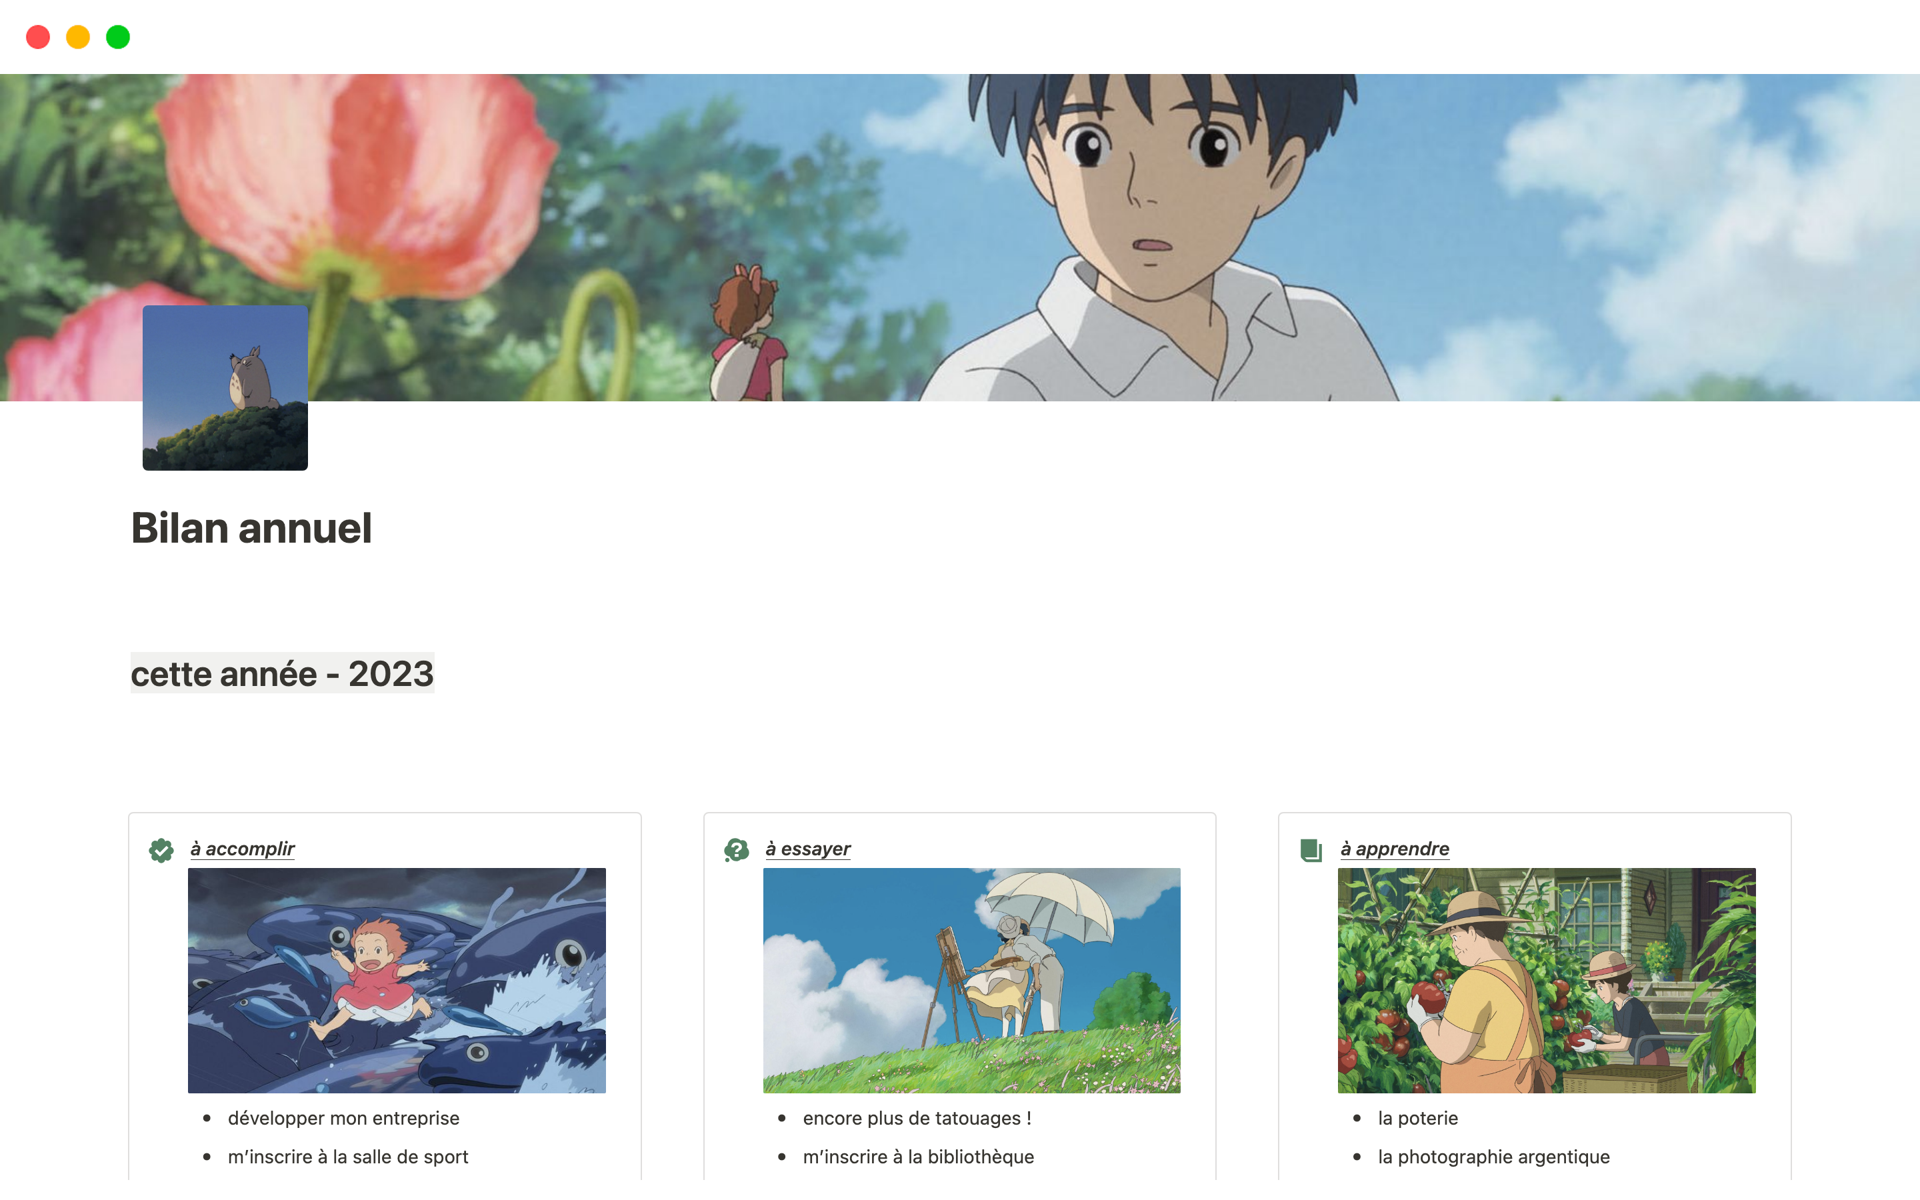 Bilan annuel - Studio Ghibli님의 템플릿 미리보기